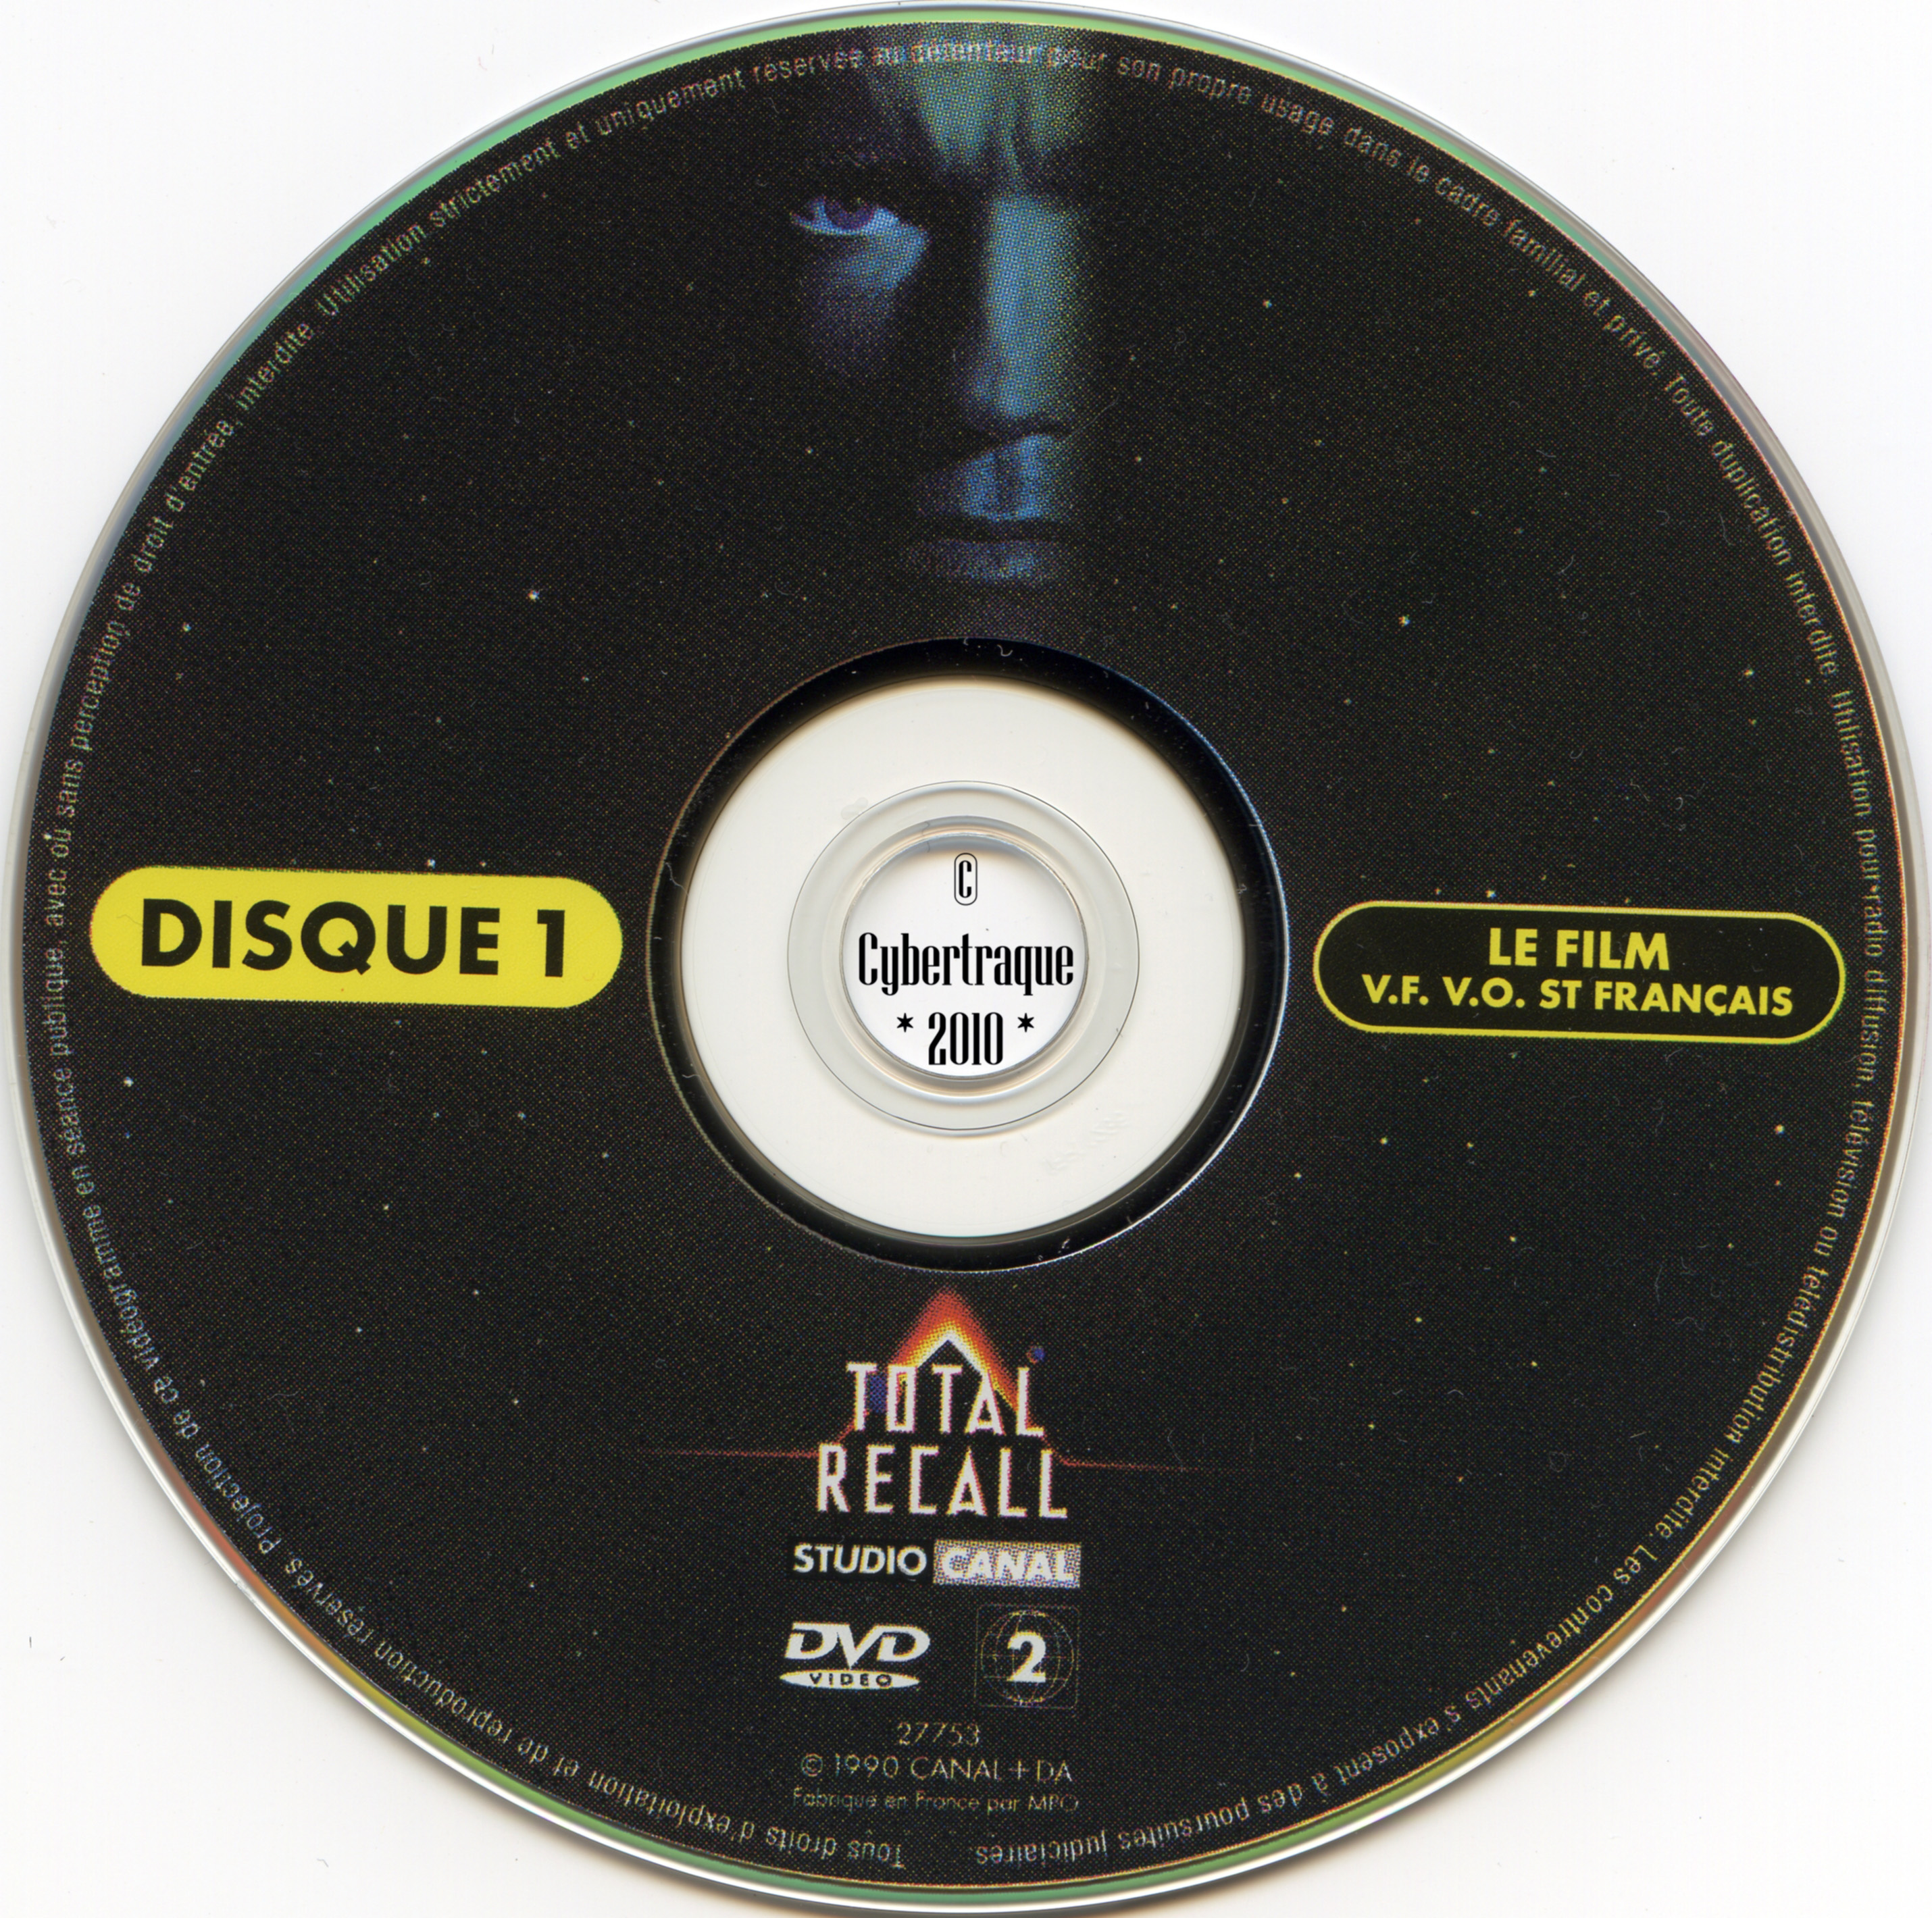 Total recall DISC 1